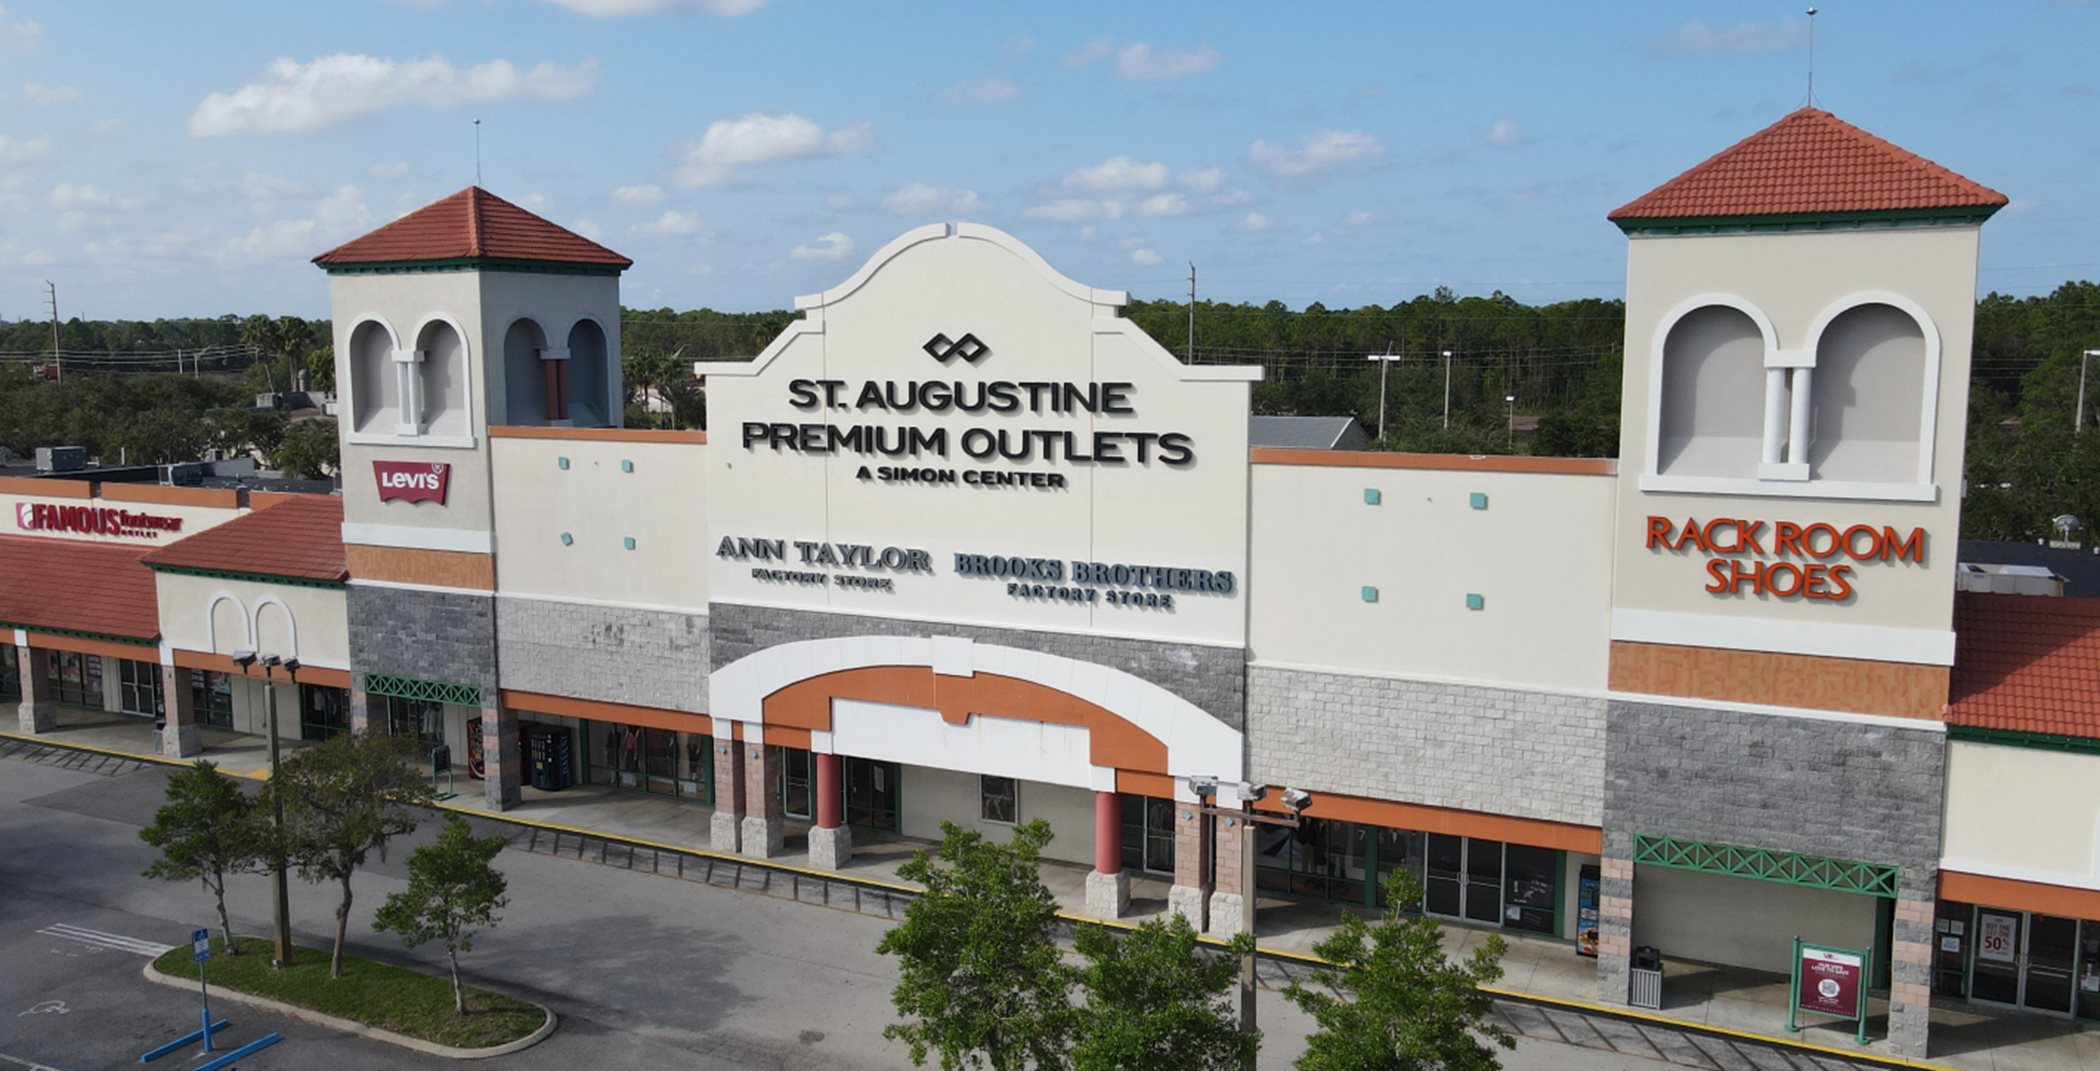 St. Augustine Premium Outlets 